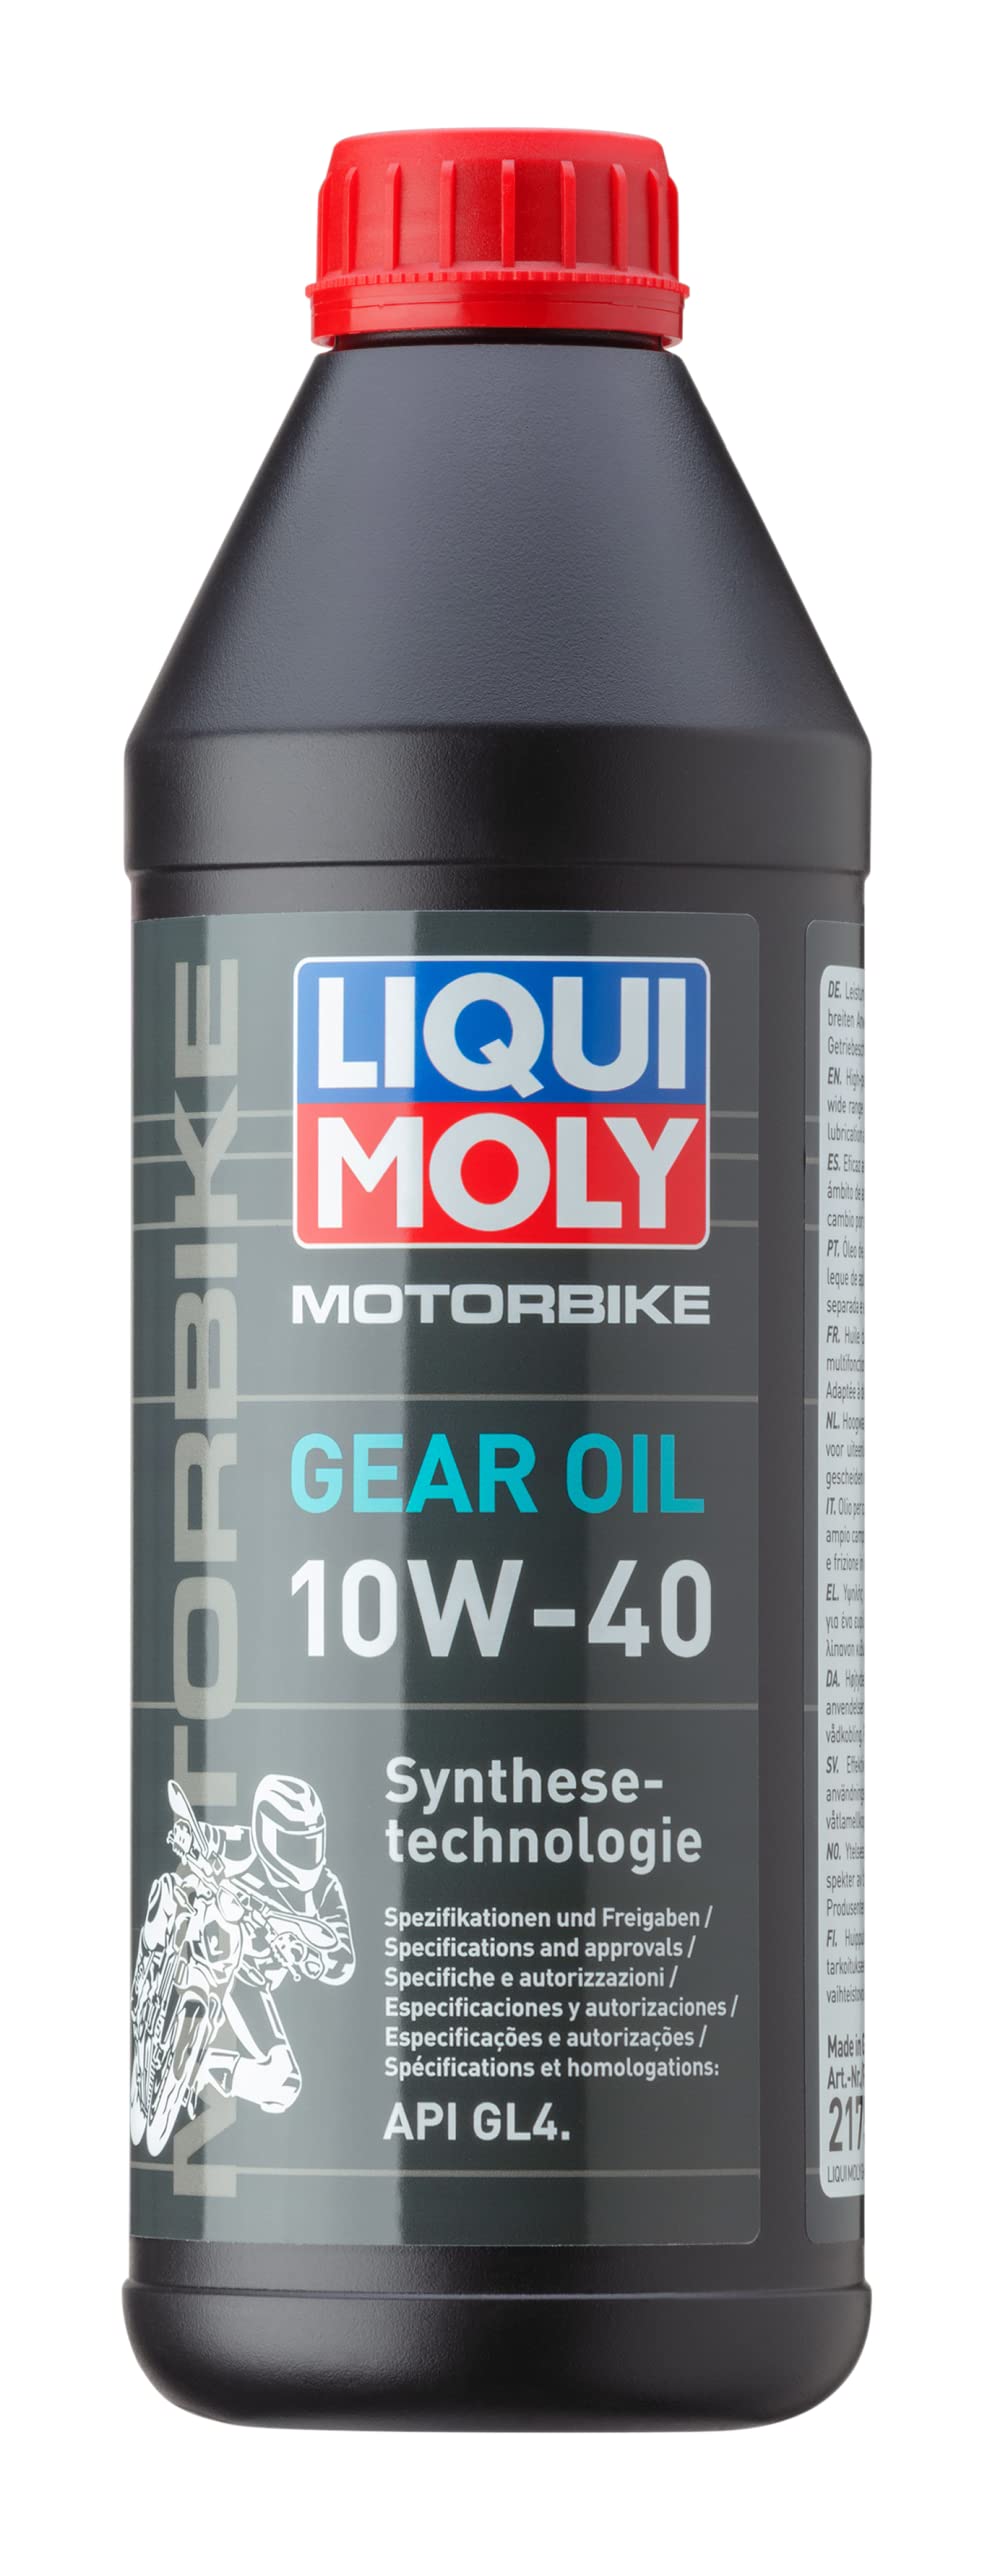 LIQUI MOLY Motorbike Gear Oil 10W-40 | 1 L | Motorrad Getriebeöl | Art.-Nr. 21753 von Liqui Moly